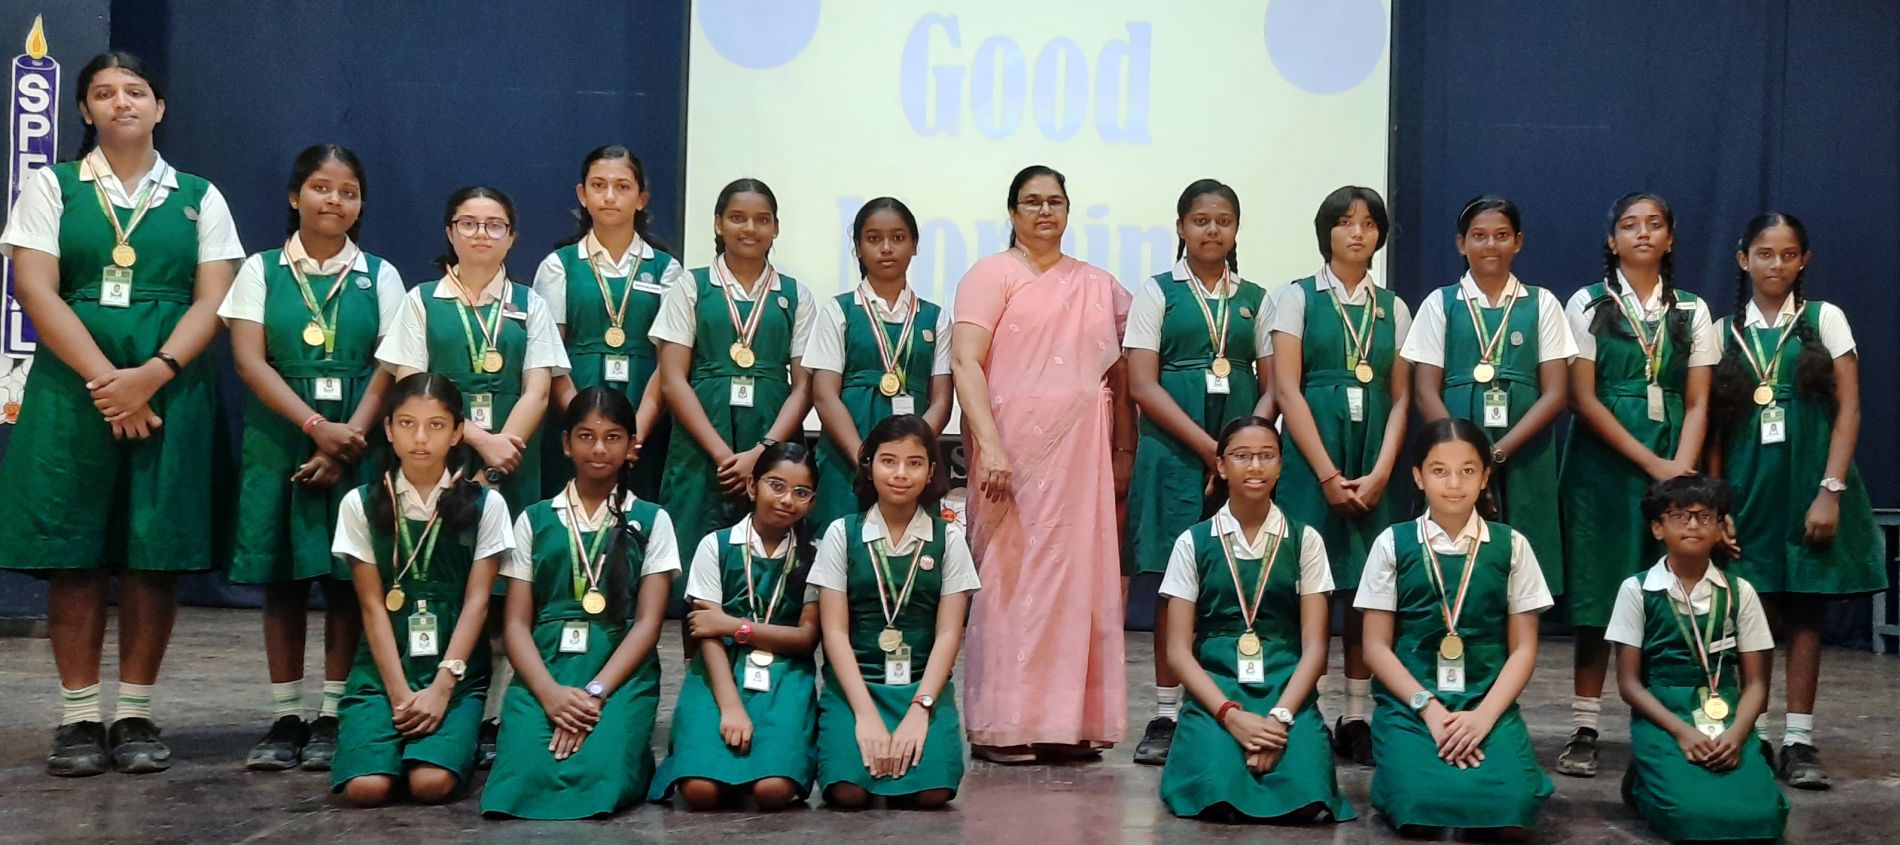 presentation convent school chennai photos